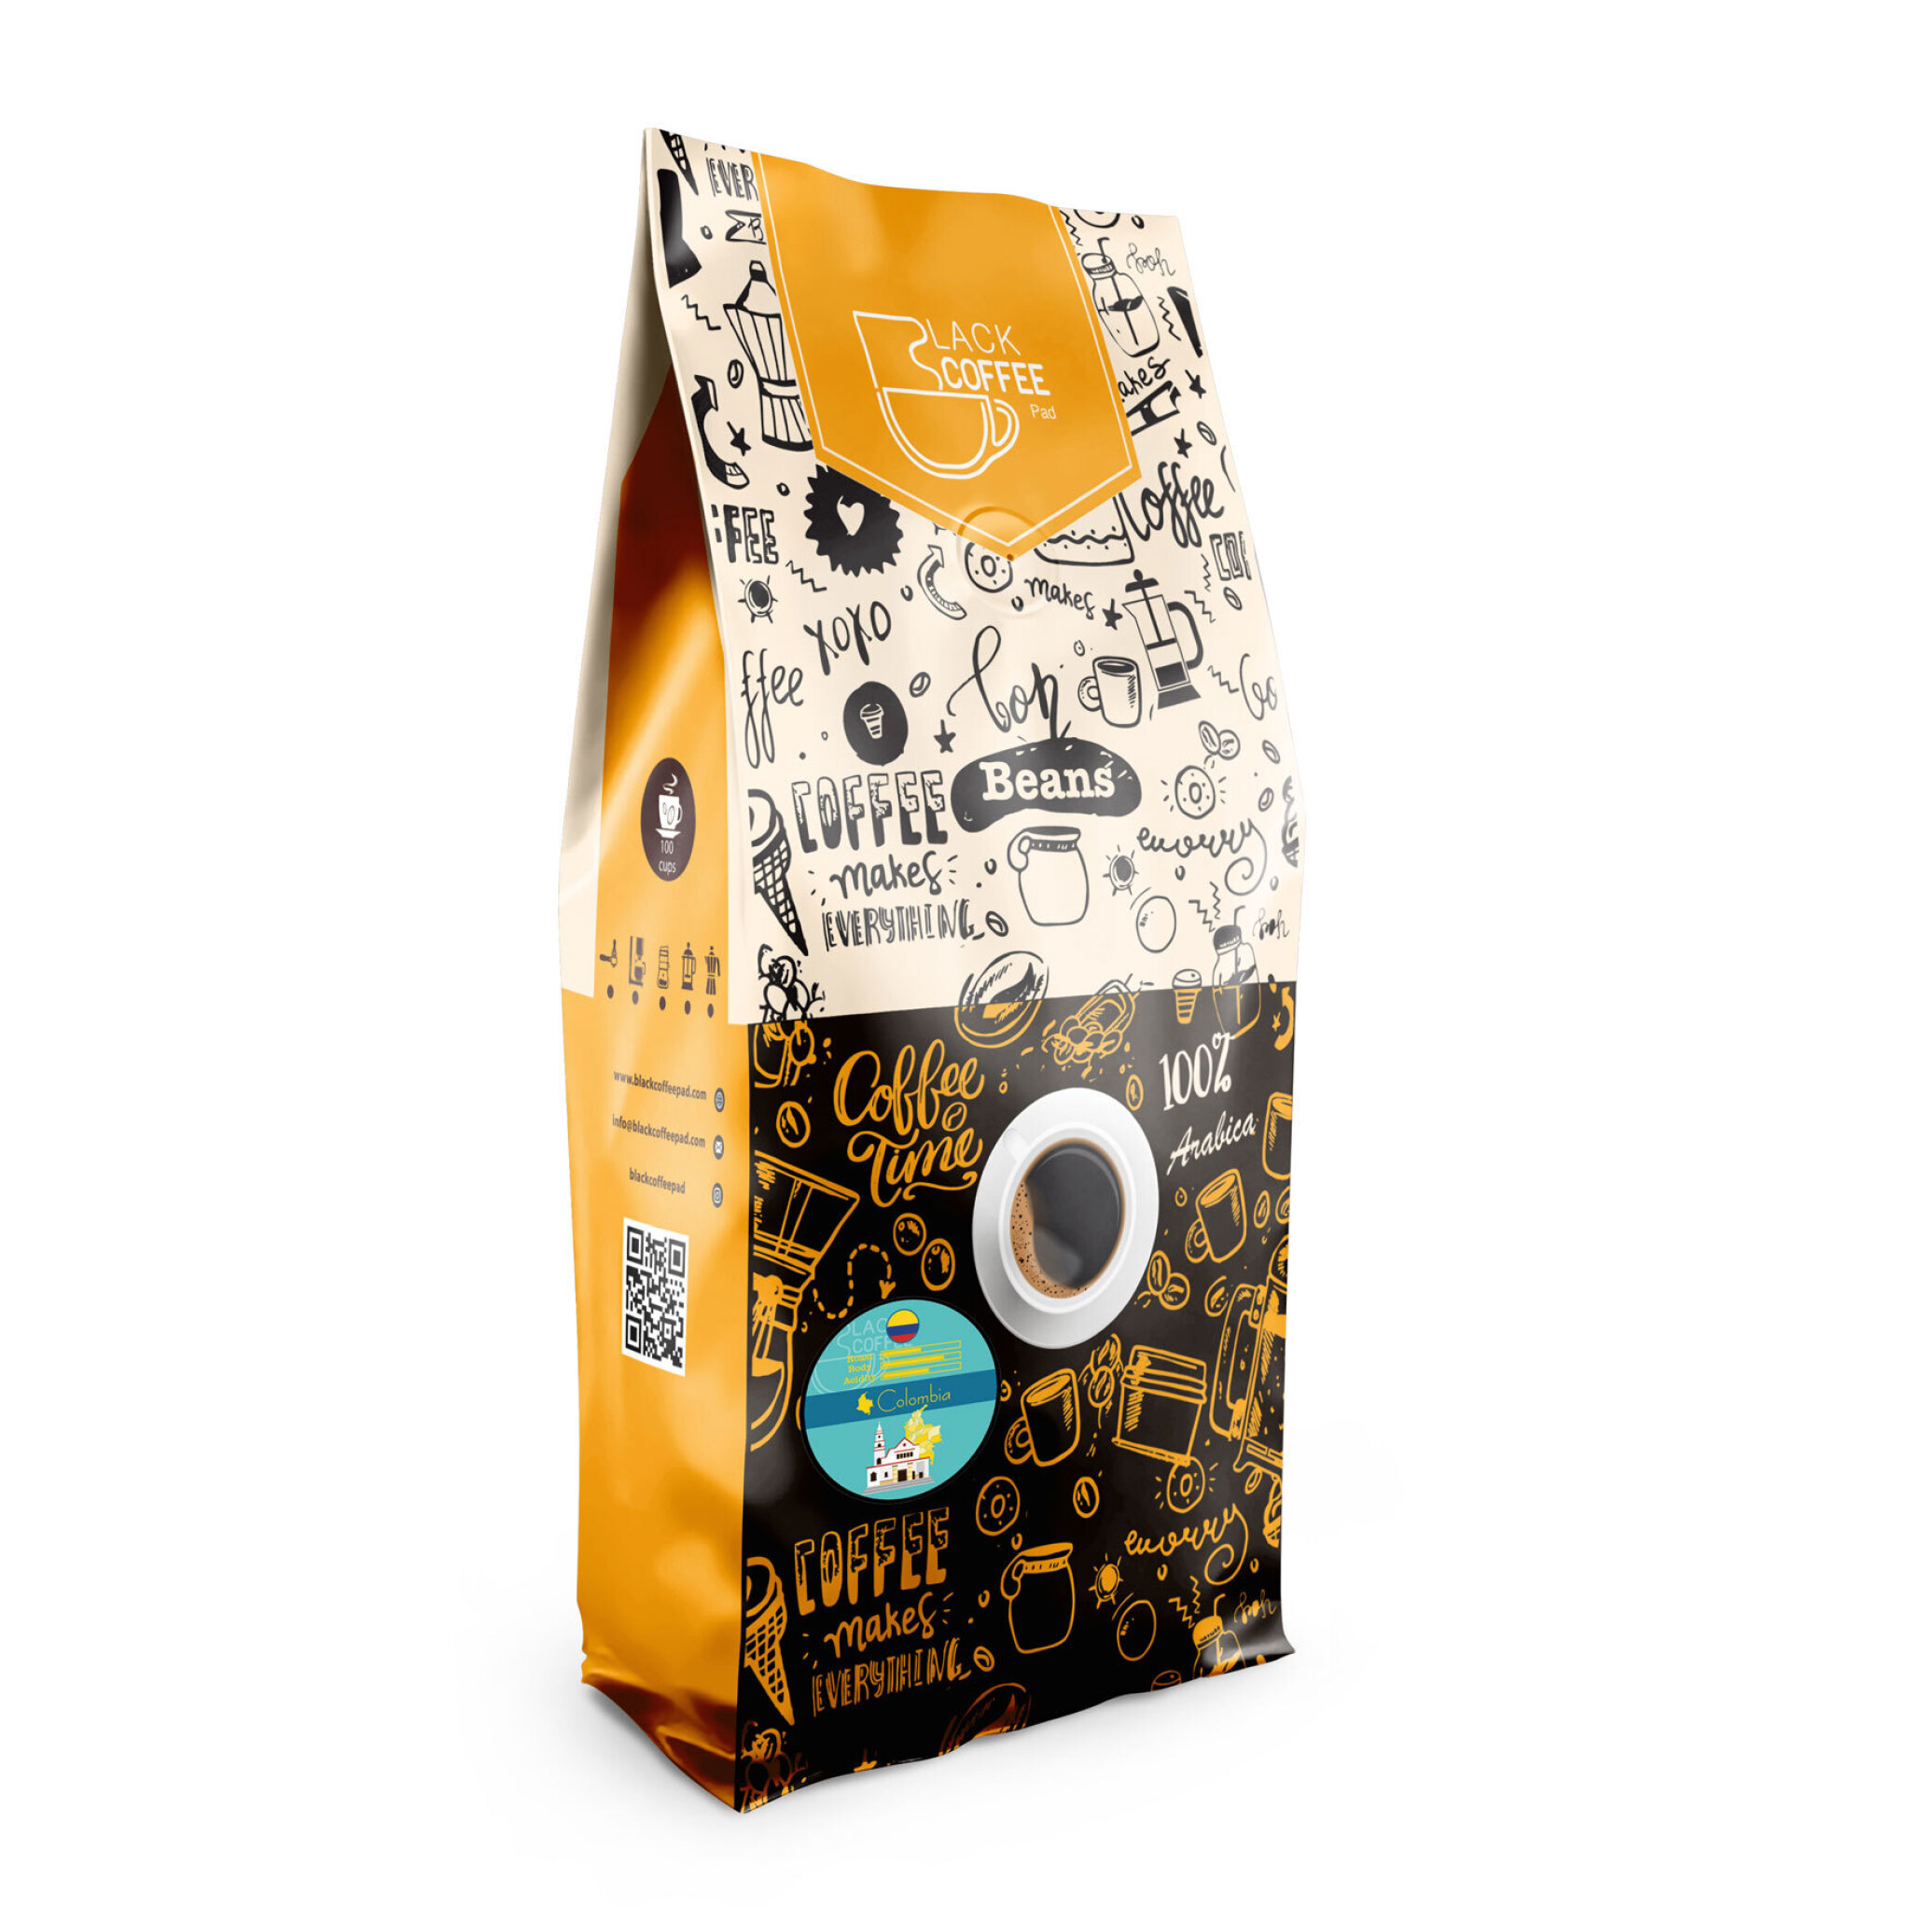  دانه قهوه کلمبیا | Colombia Coffee Beans یک کیلوگرم | بلک کافی 